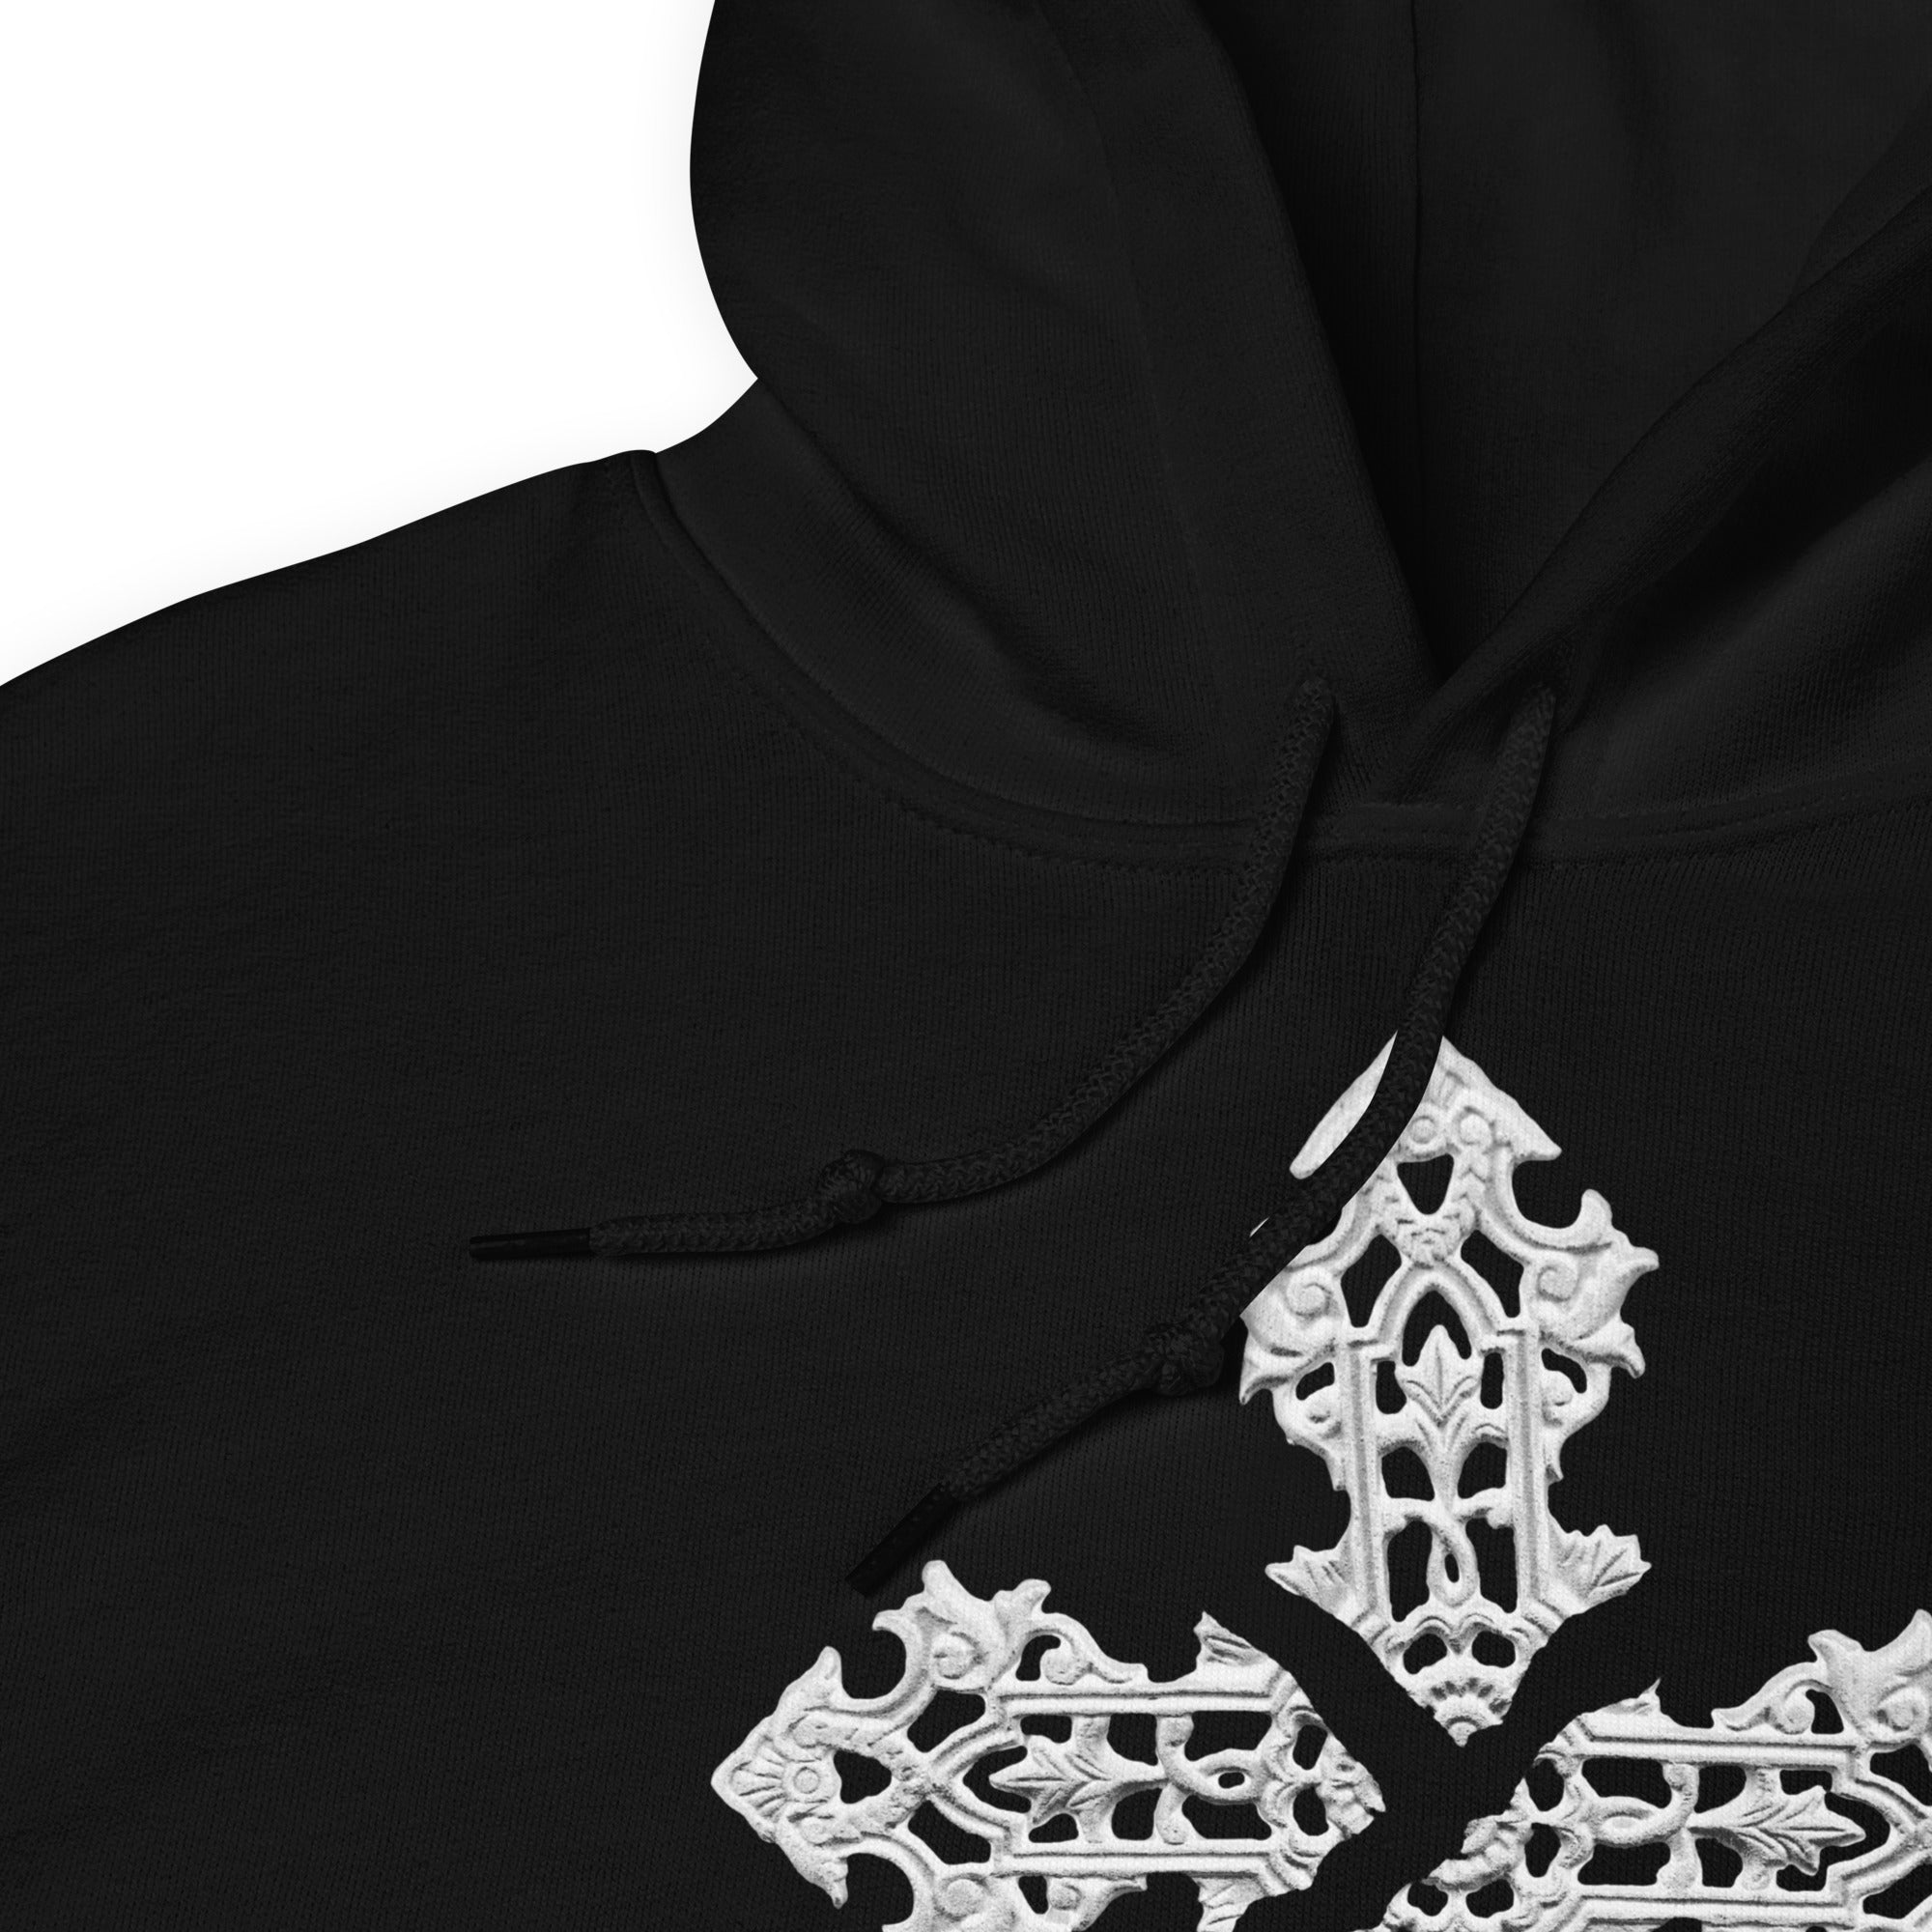 Broken Holy Cross Unisex Hoodie Sweatshirt - Edge of Life Designs